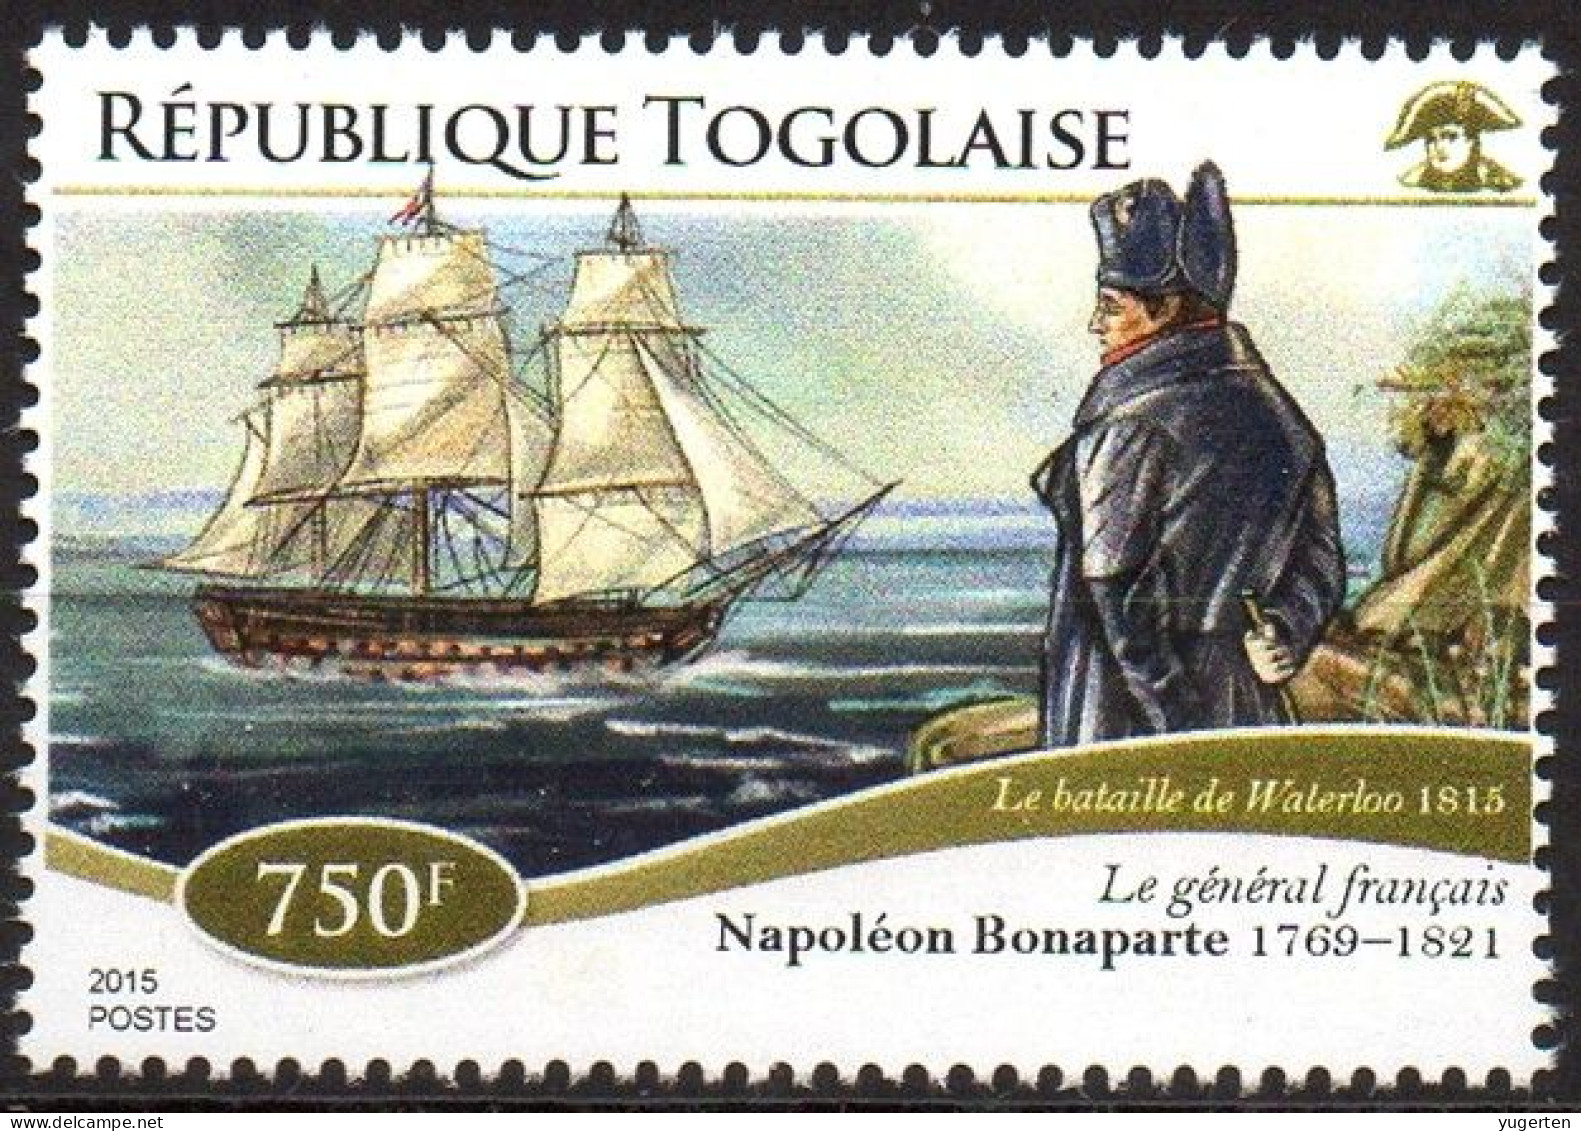 TOGO 2015 - 1v - MNH - 200th Anniversary Of Waterloo Battle - Napoleon Bonaparte - Napoleone - France - Ship - Napoleon